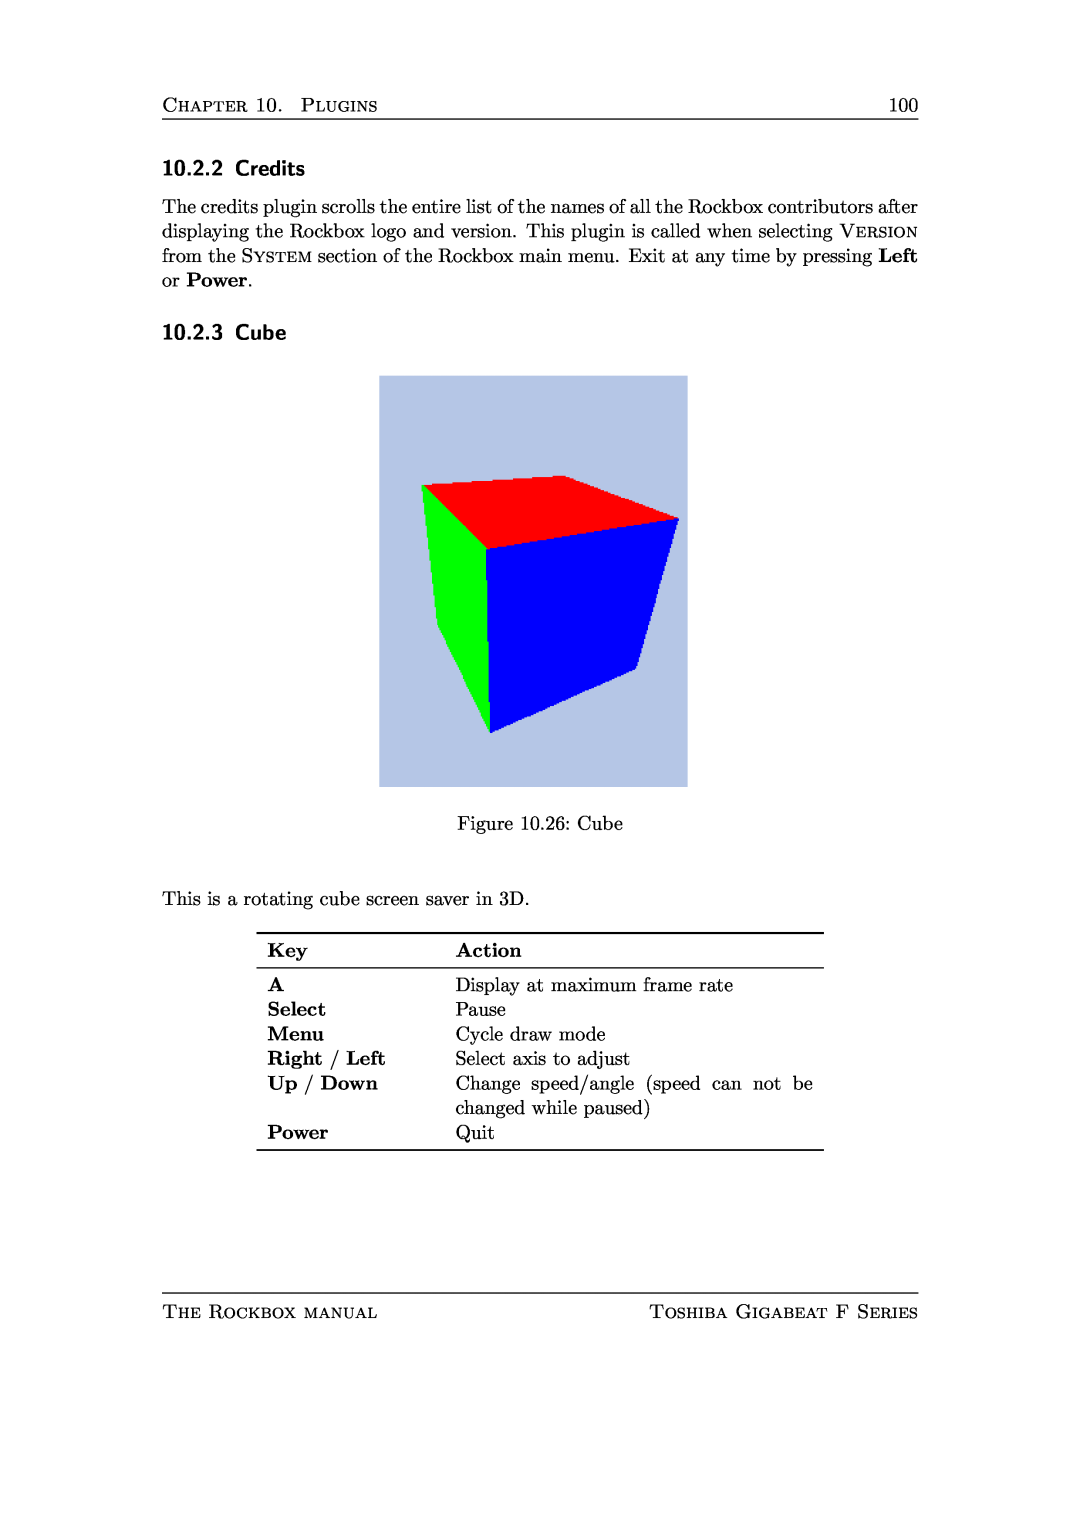 Toshiba F Series manual Credits, Cube 